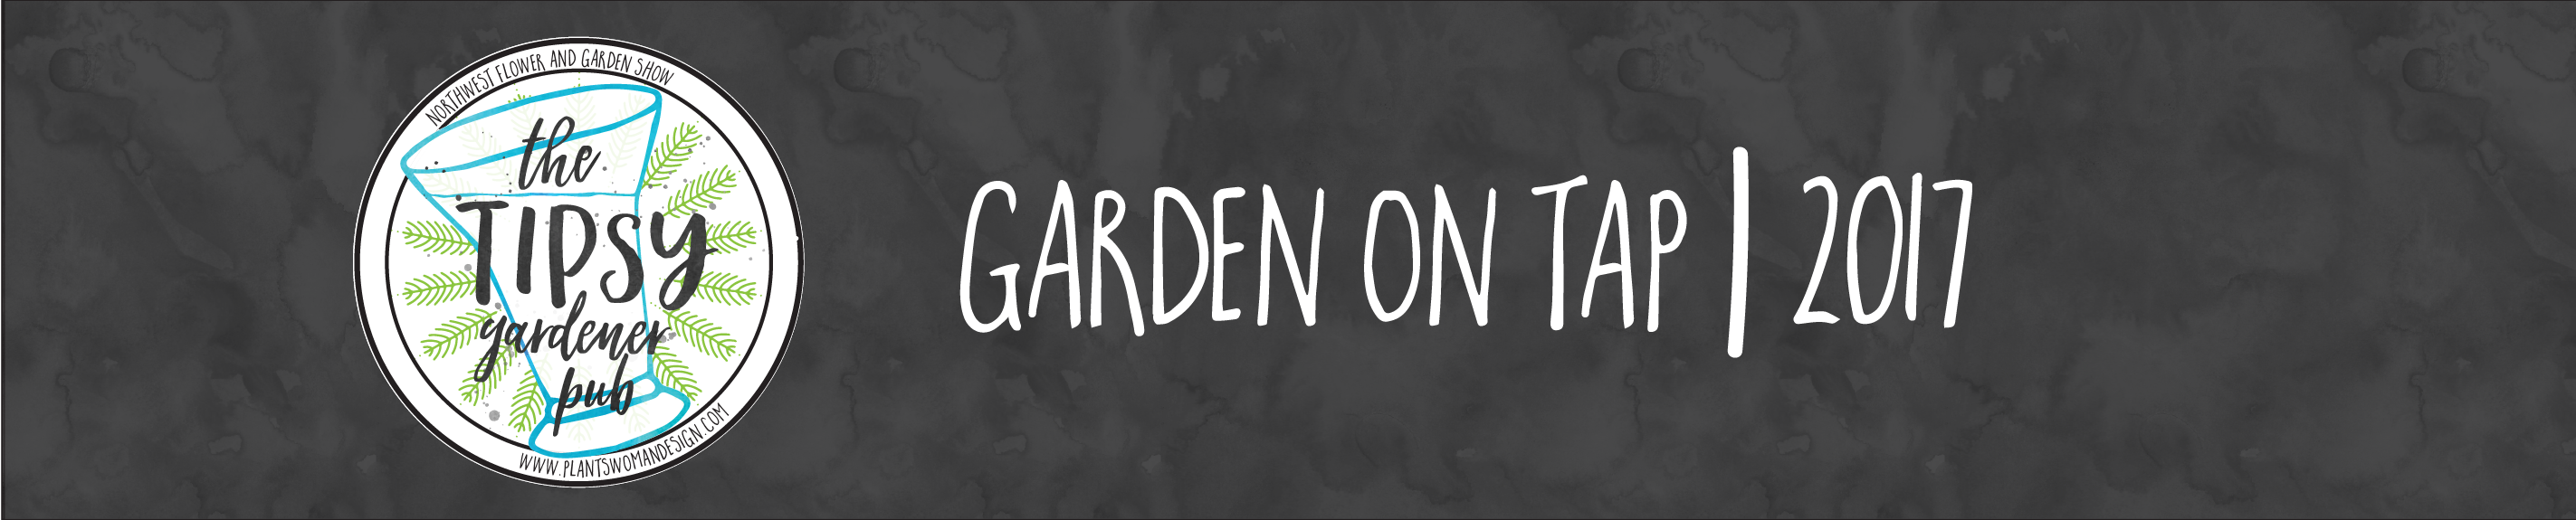 2017 Garden Show website banner